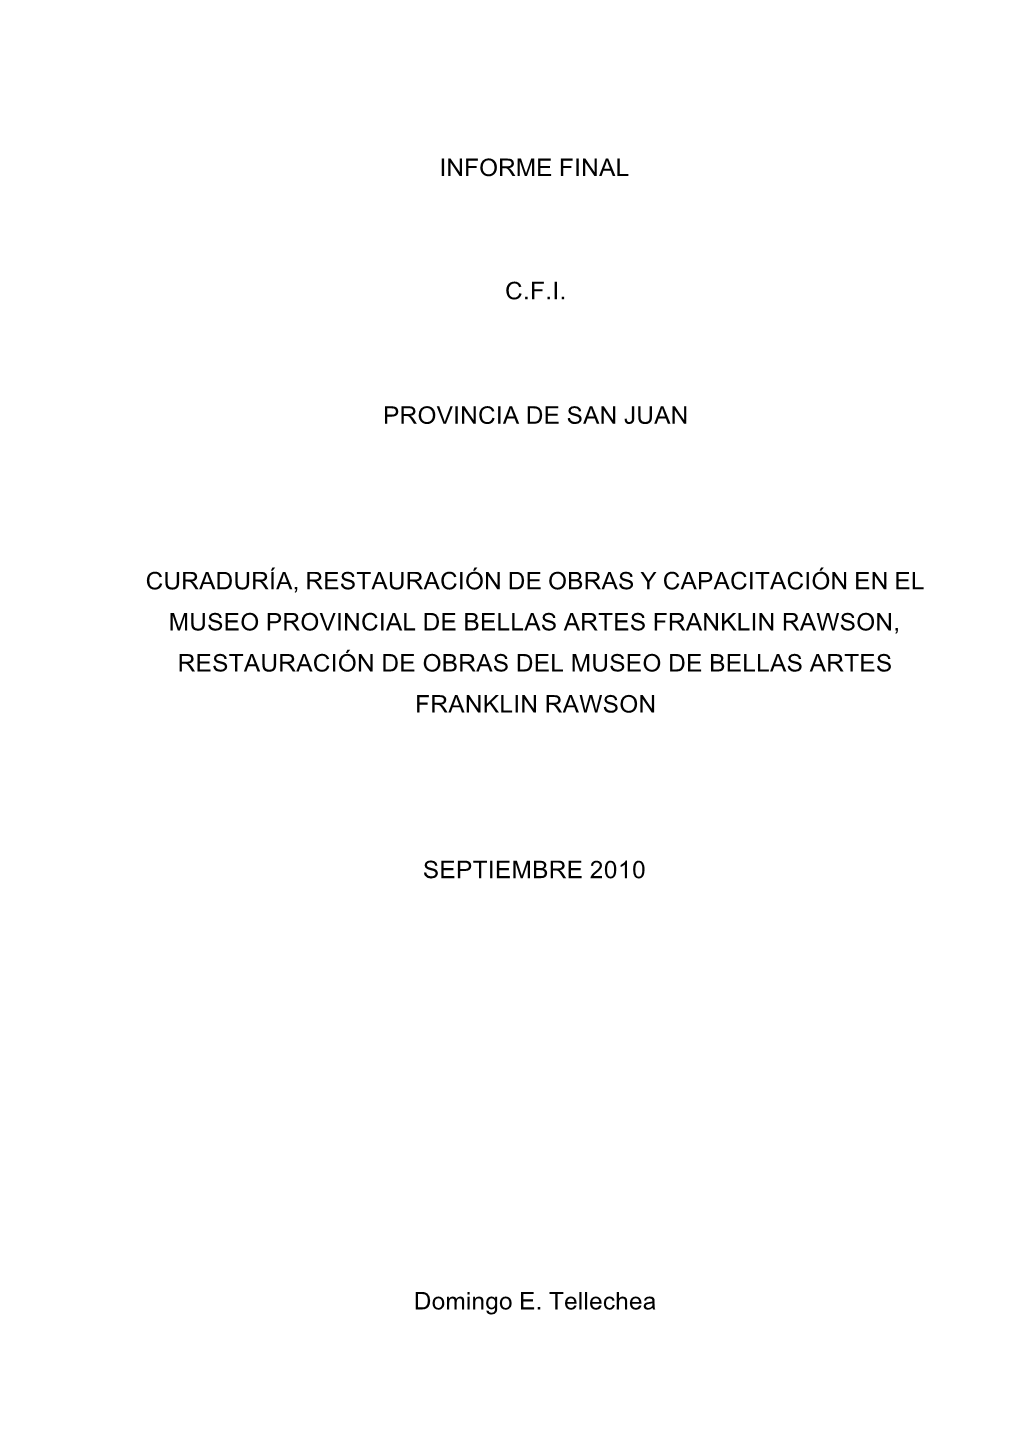 Informe Final C.F.I. Provincia De San Juan Curaduría